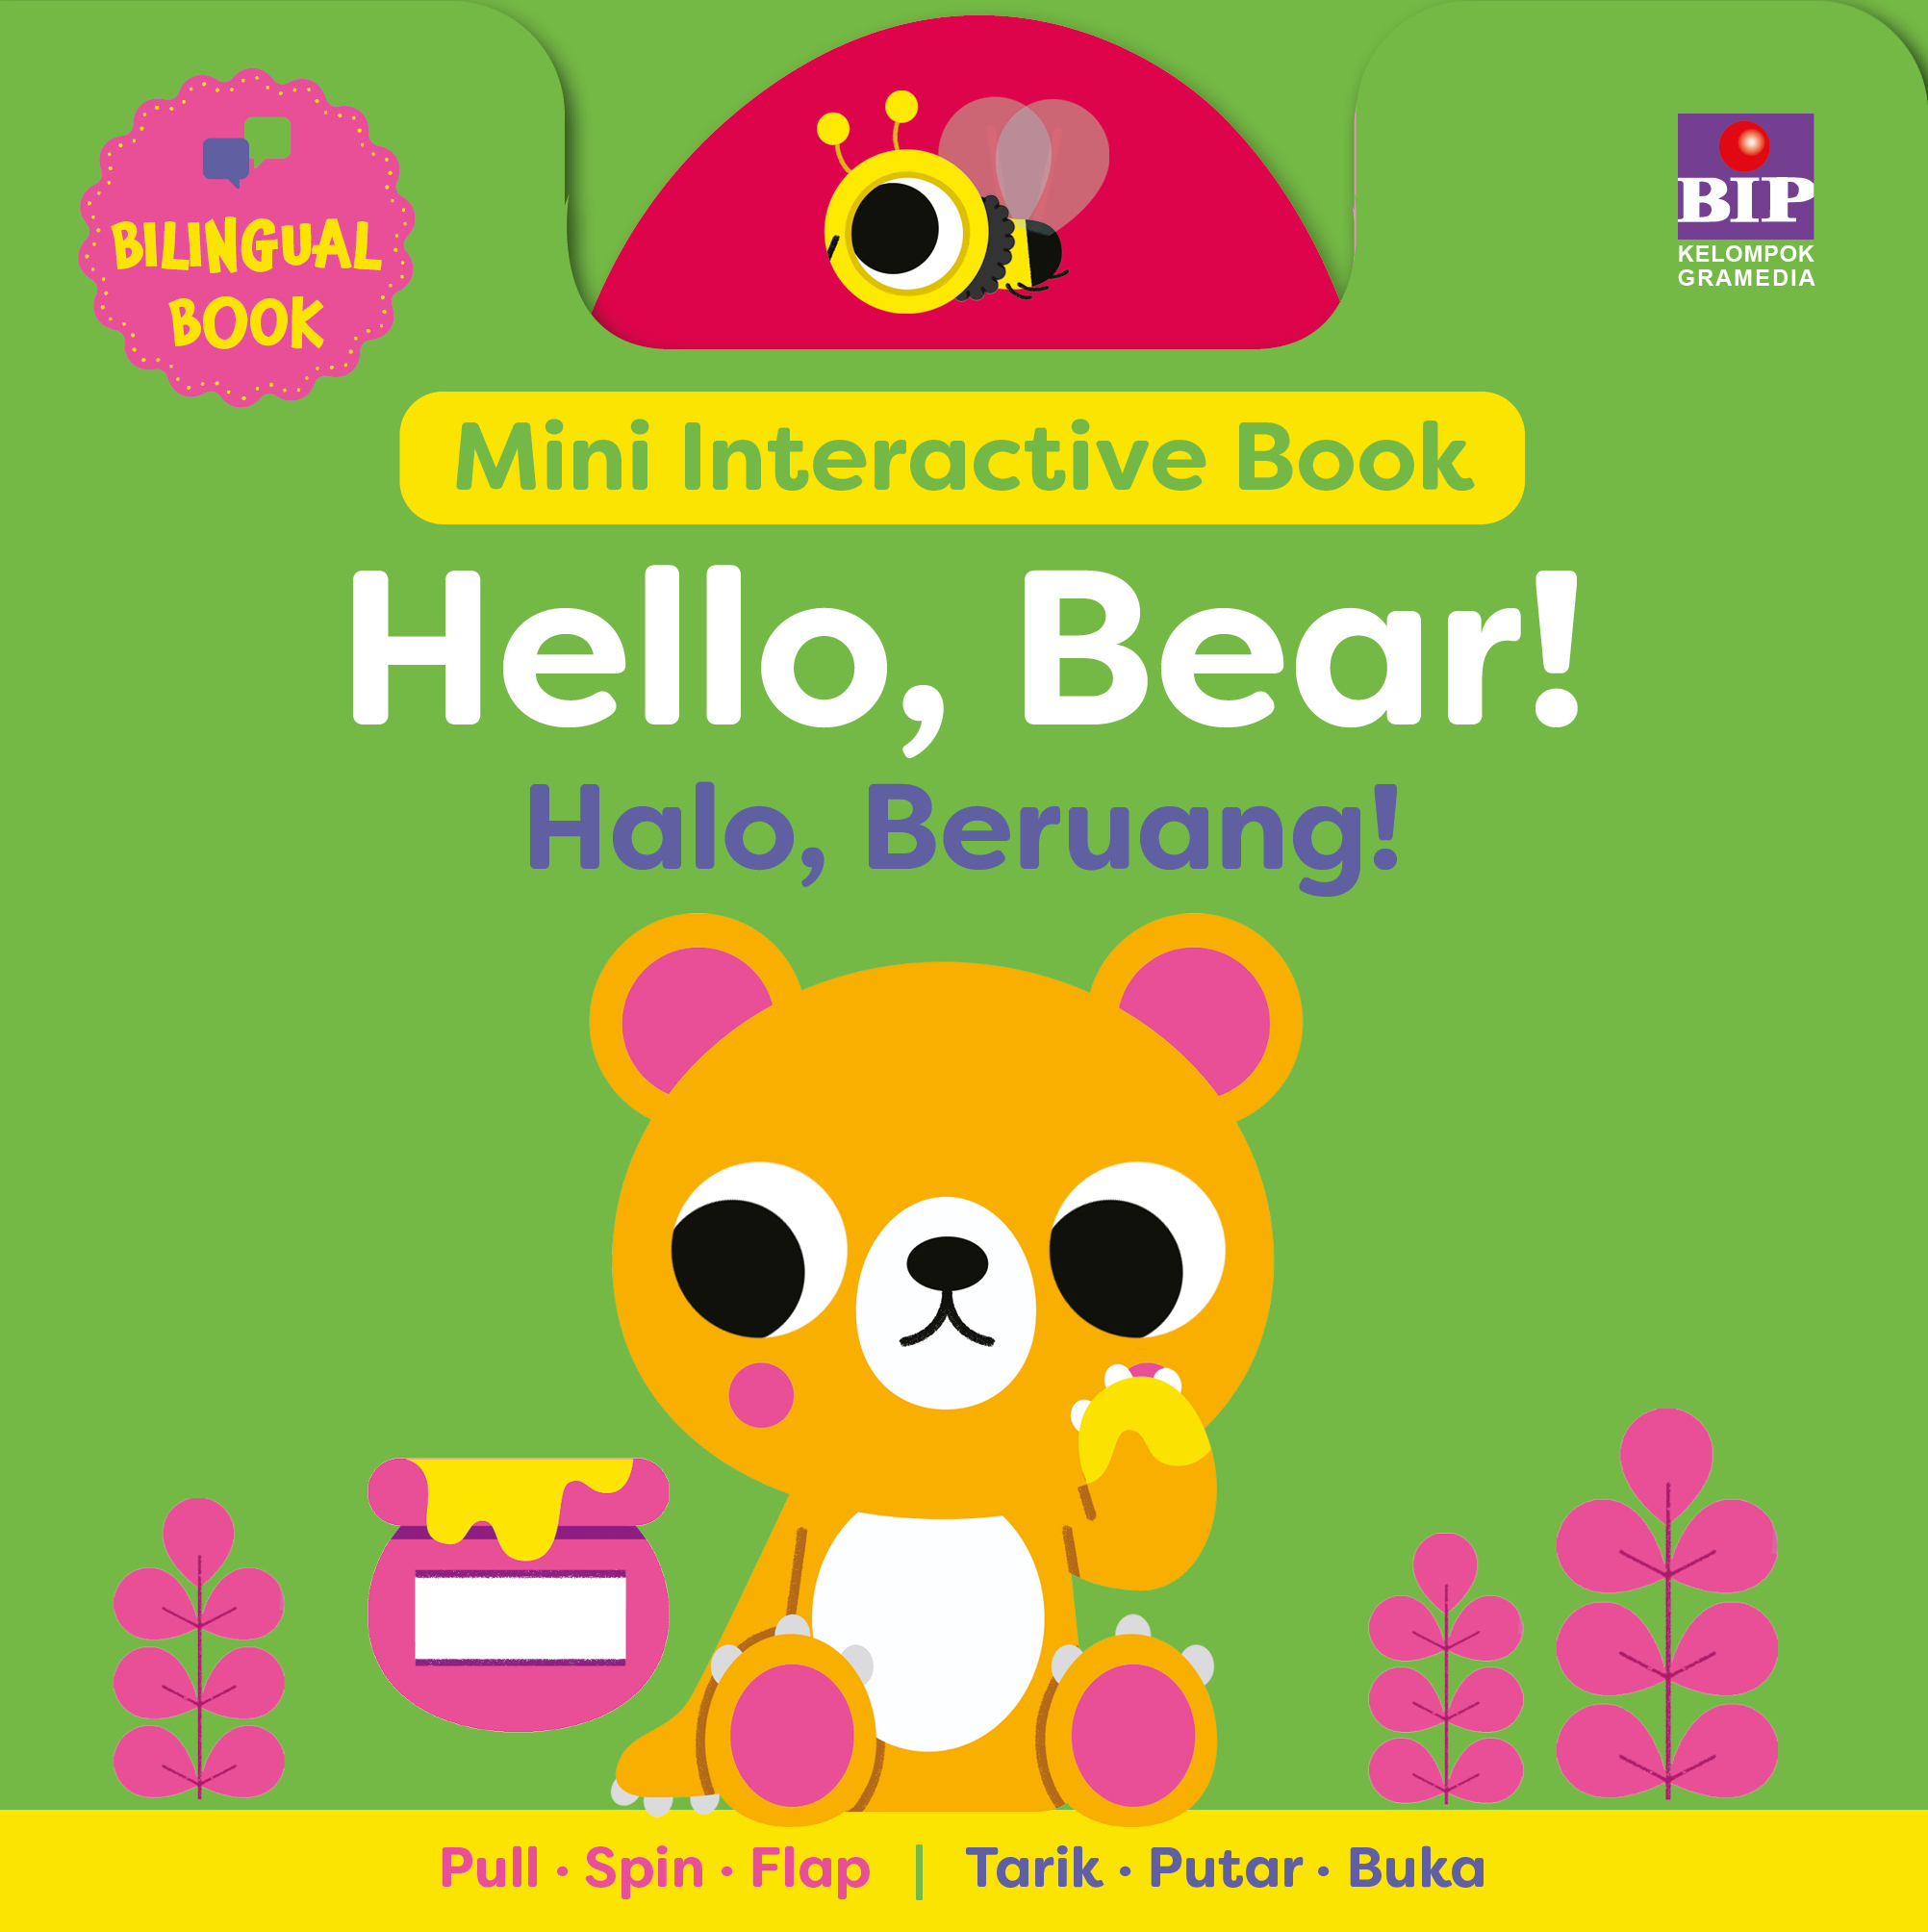 Mini Interactive Book: Hello, Bear!